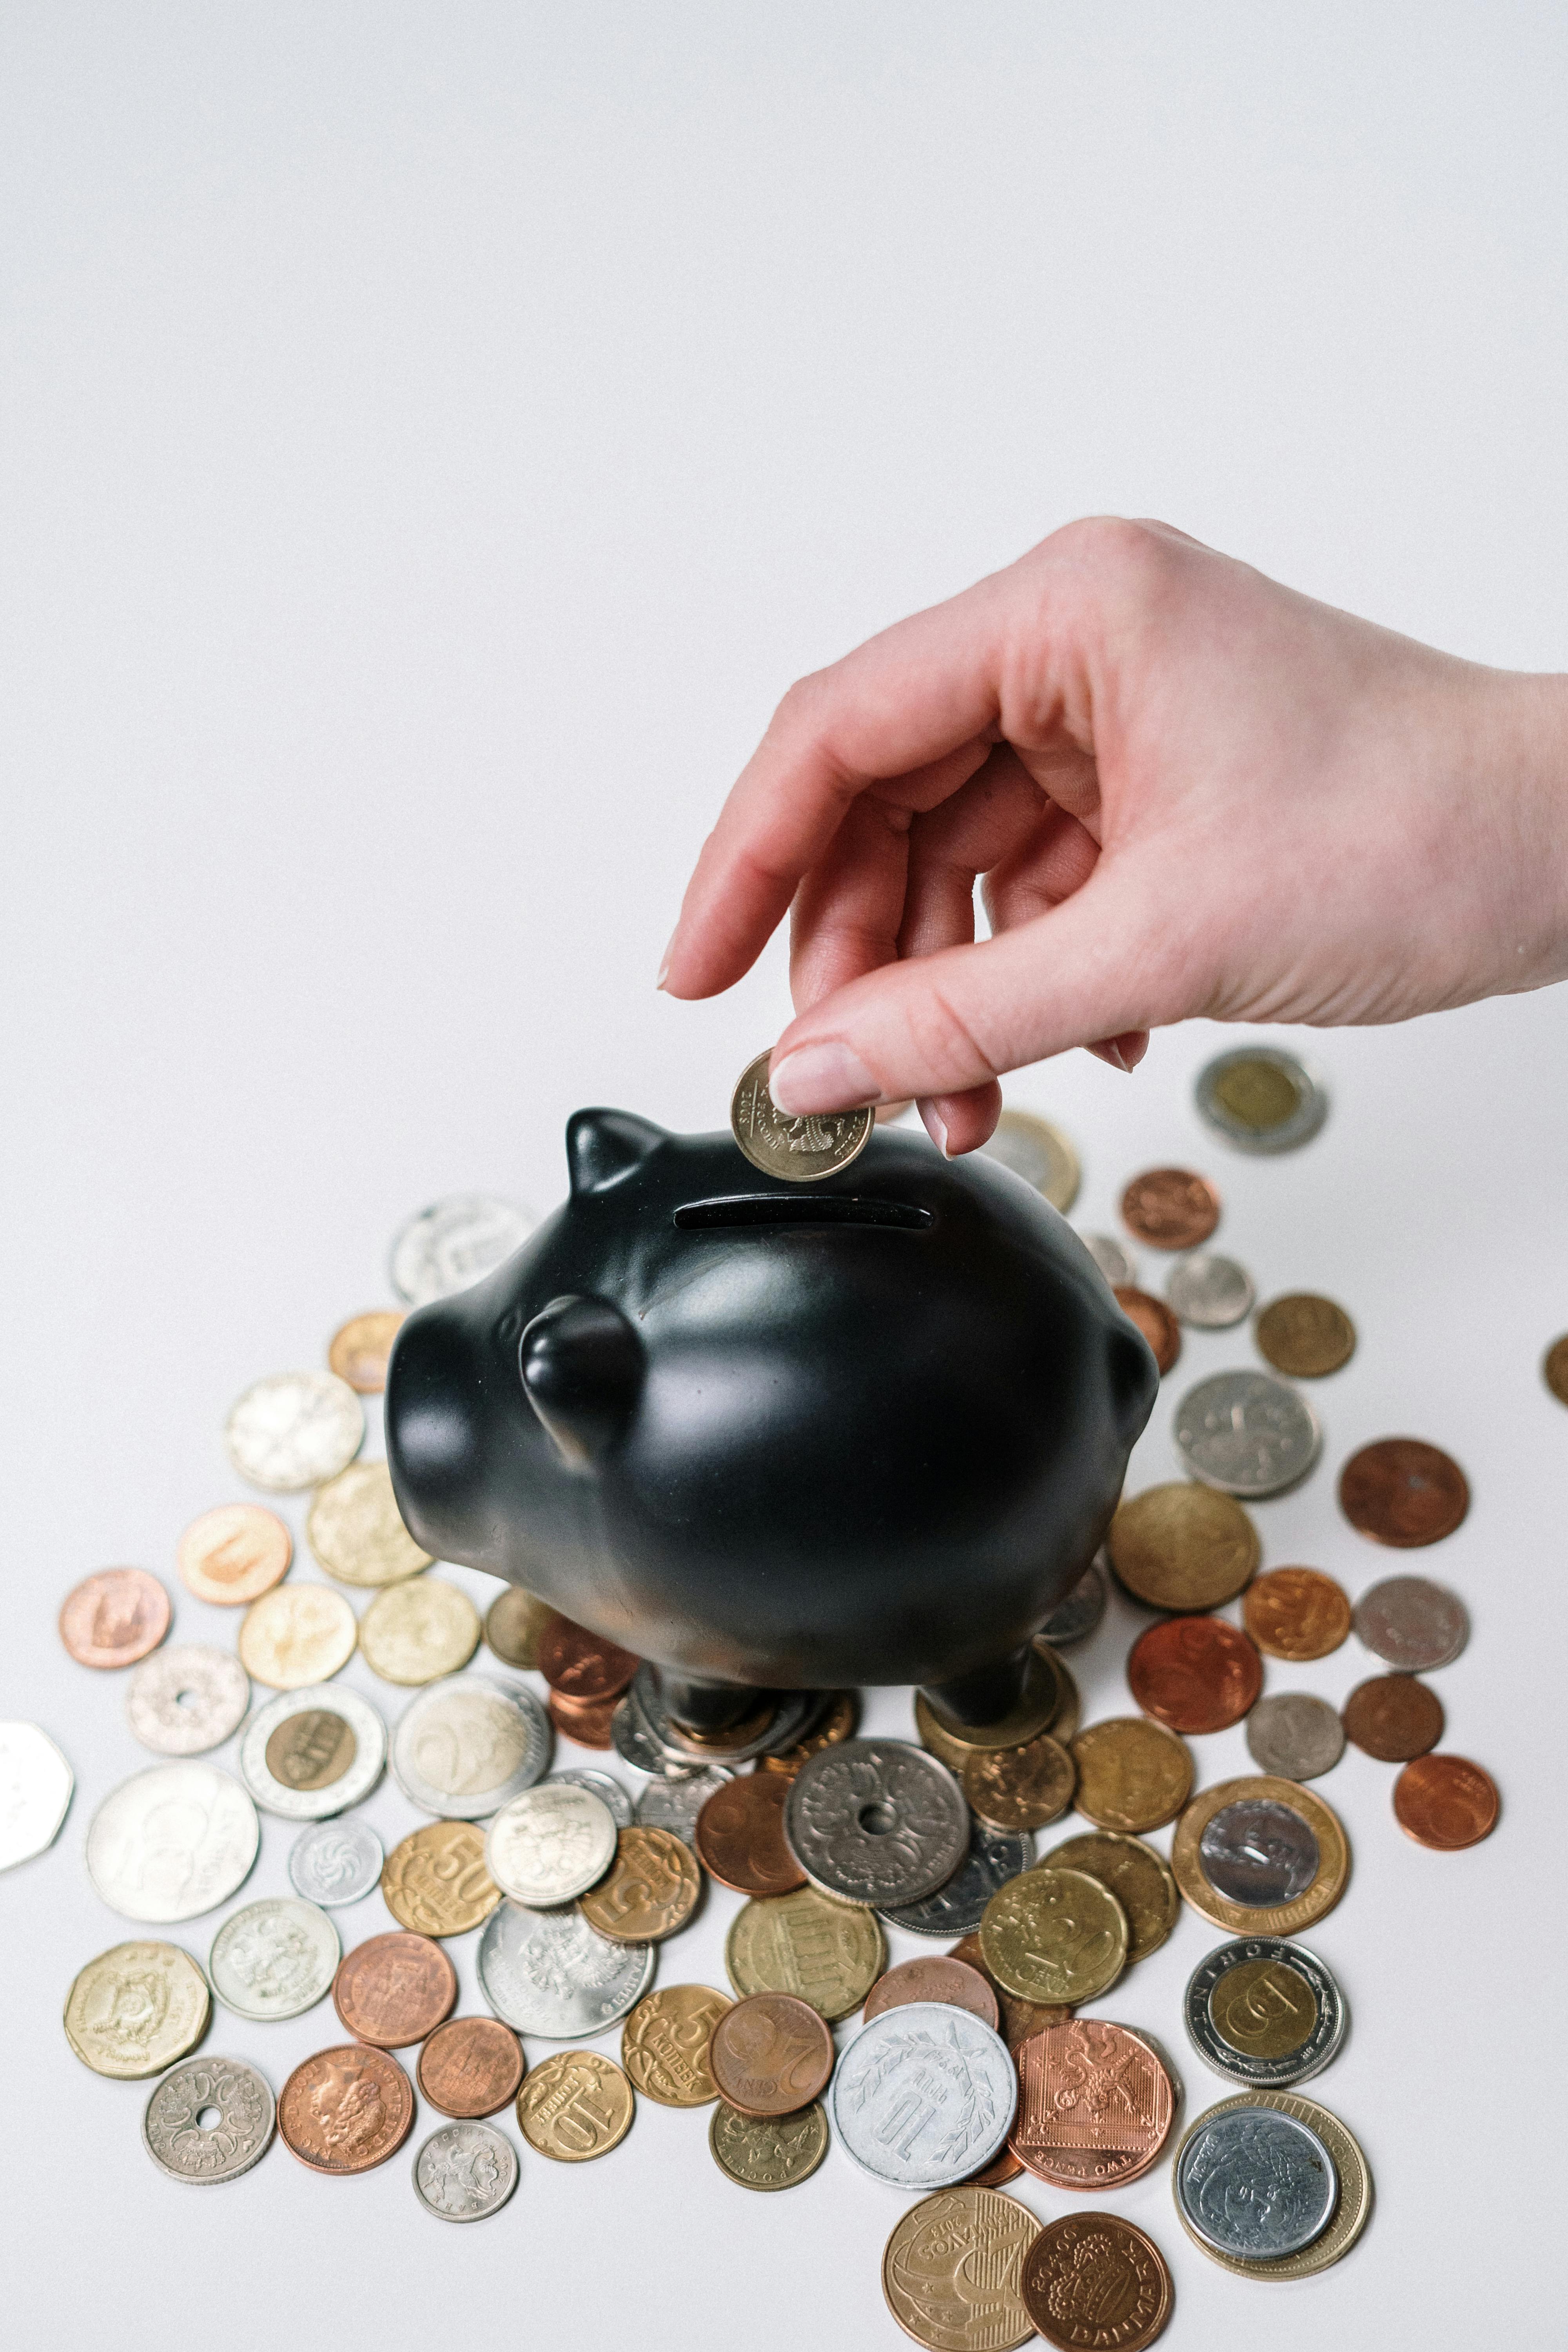 400+ Free Piggy Bank & Money Images - Pixabay